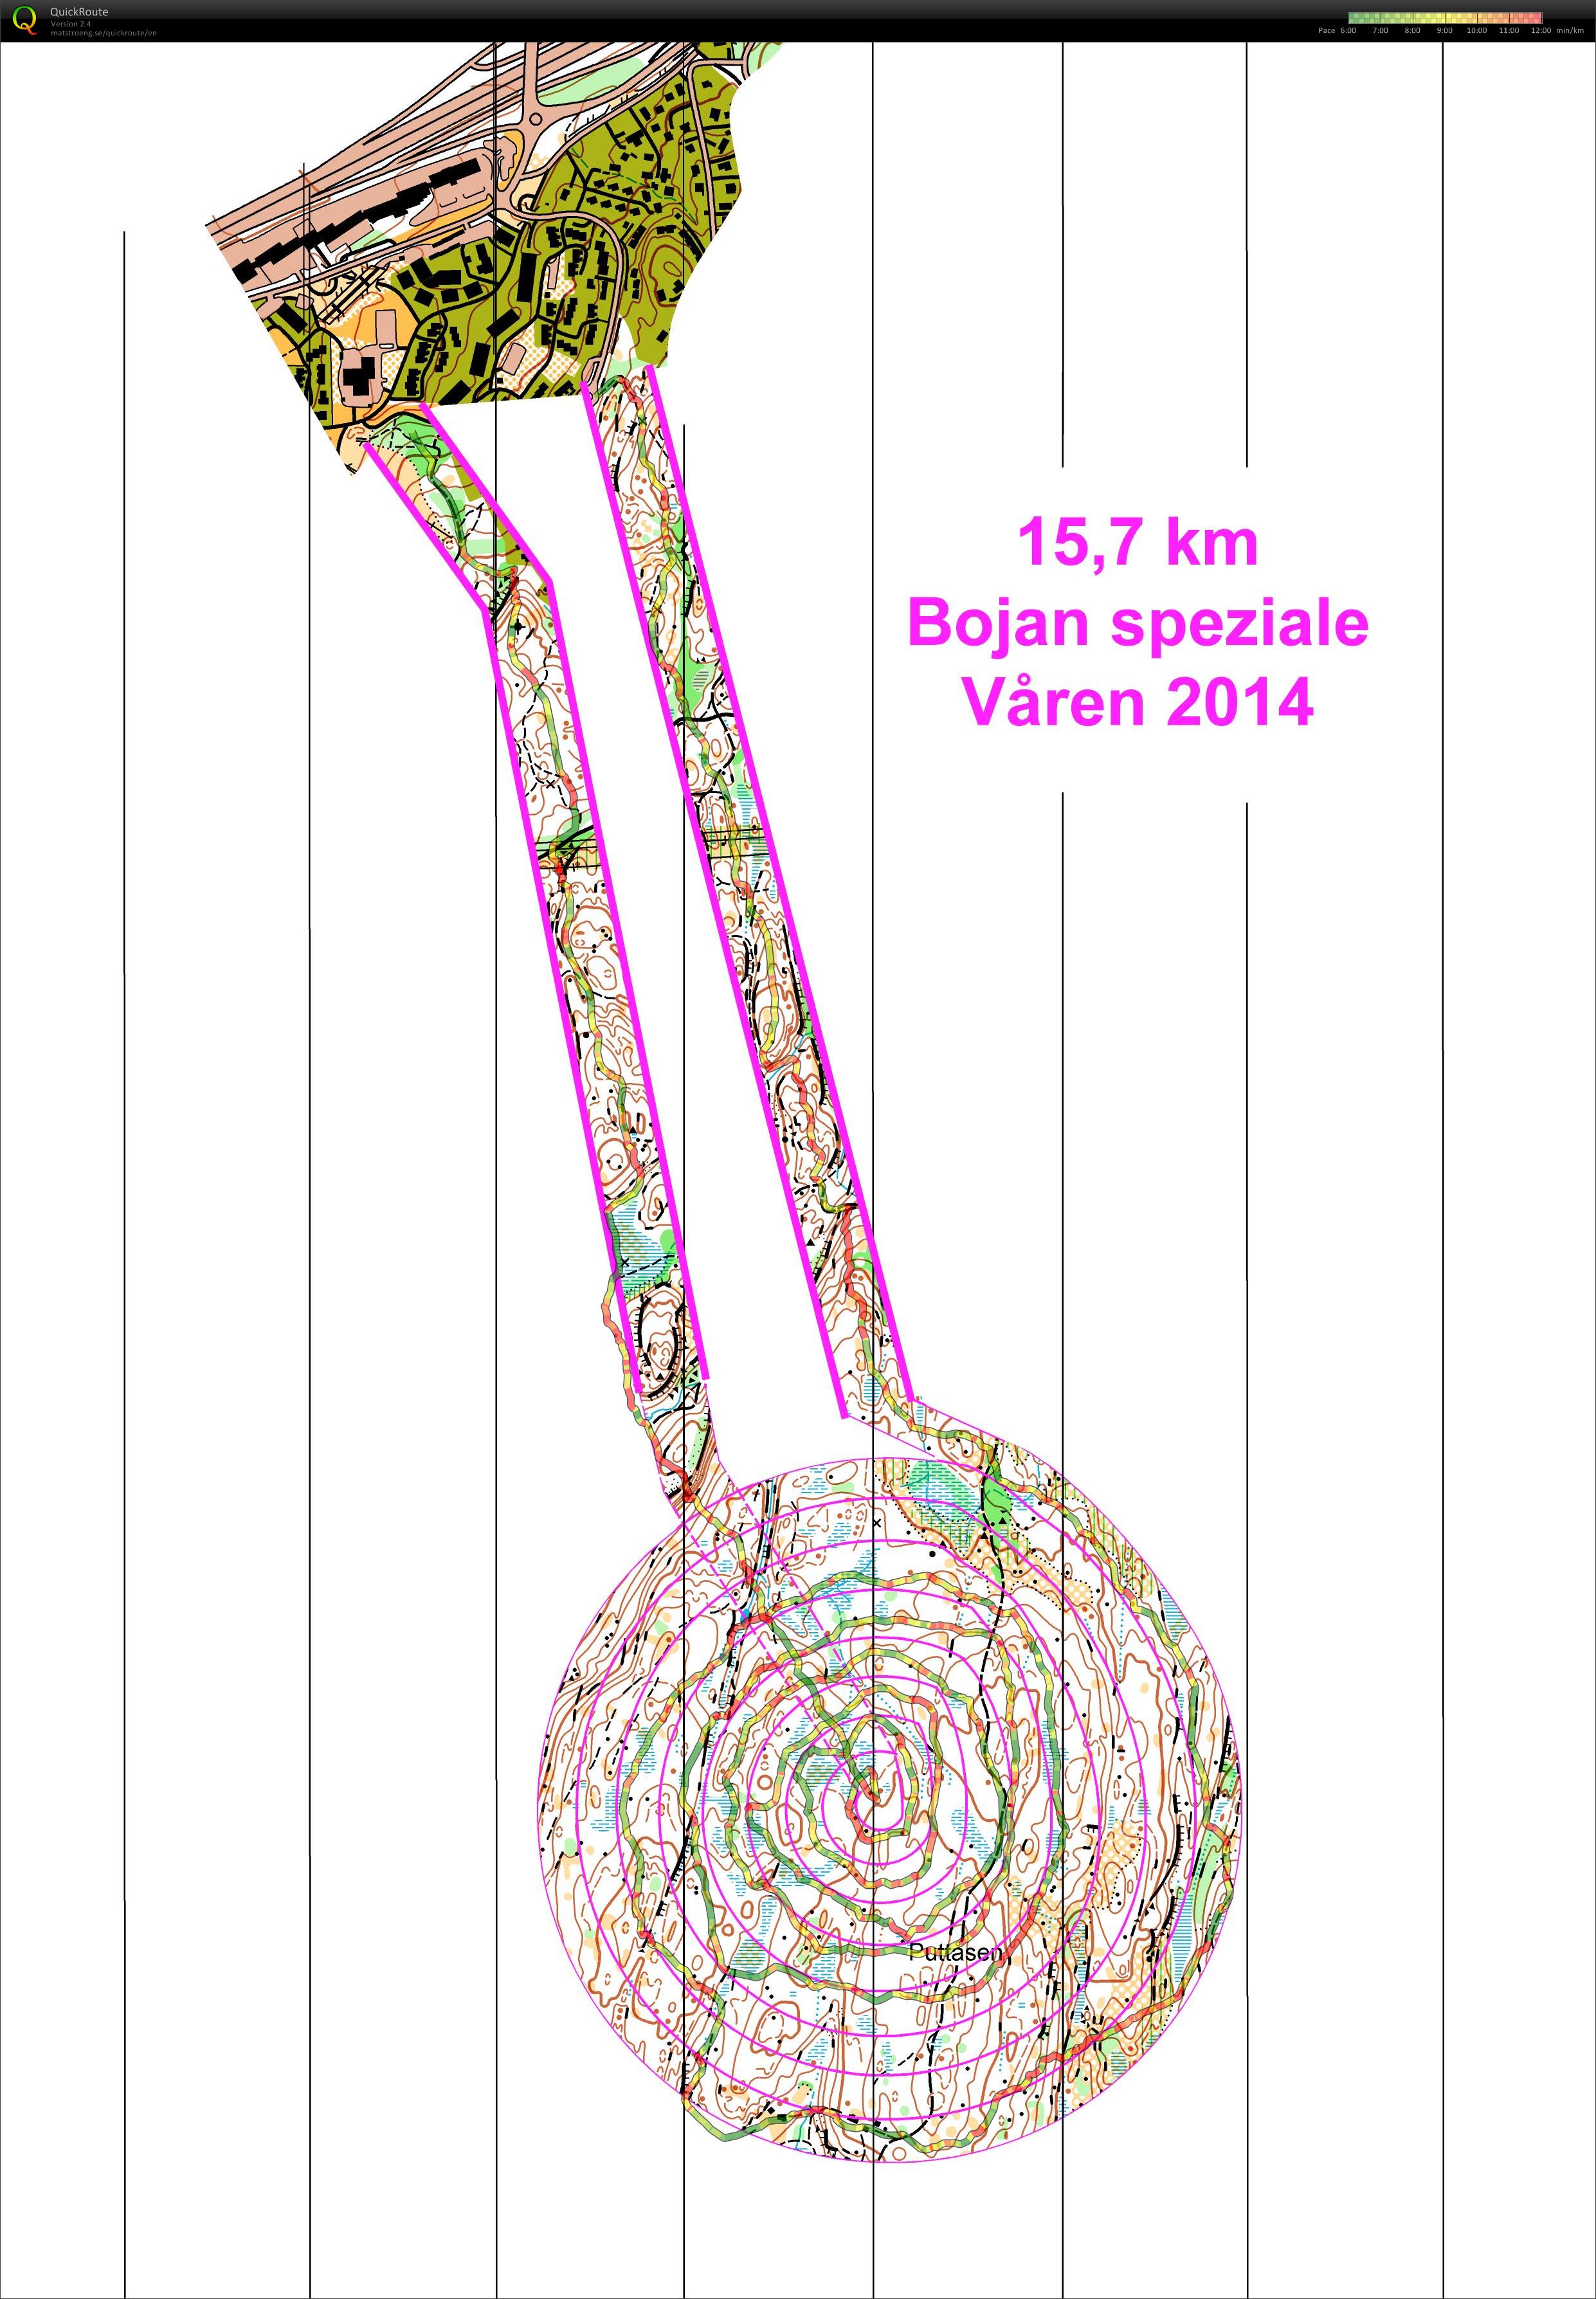 Bojan speziale (01-04-2014)